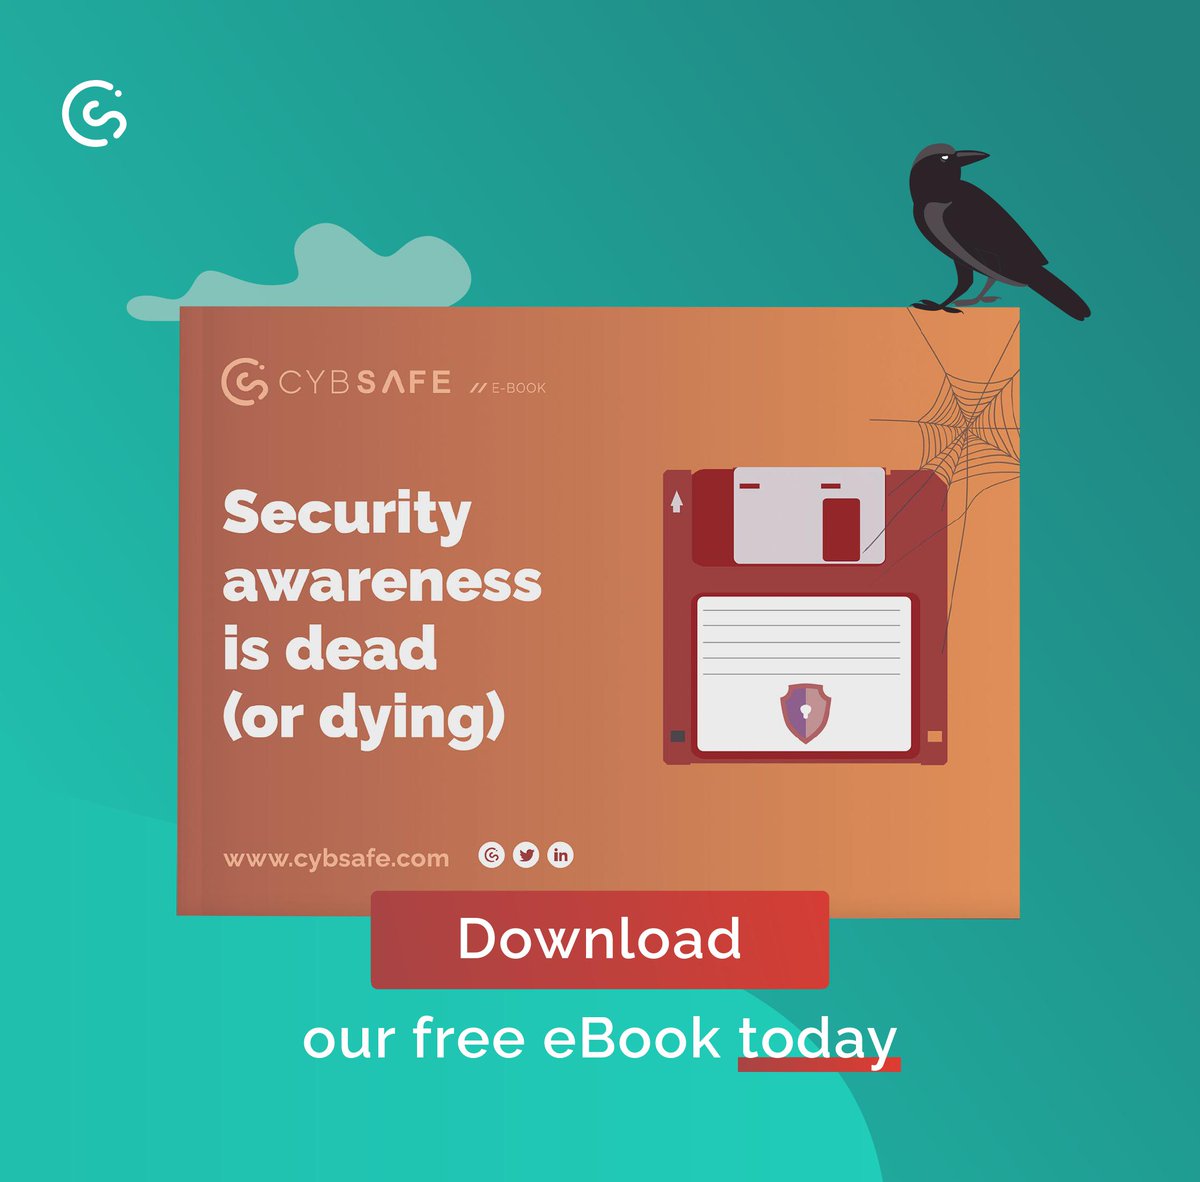 You are NOT the weakest link.

Download the free eBook → hubs.li/Q0235Th70

#SecurityAwarenessIsDead #SecurityAwareness